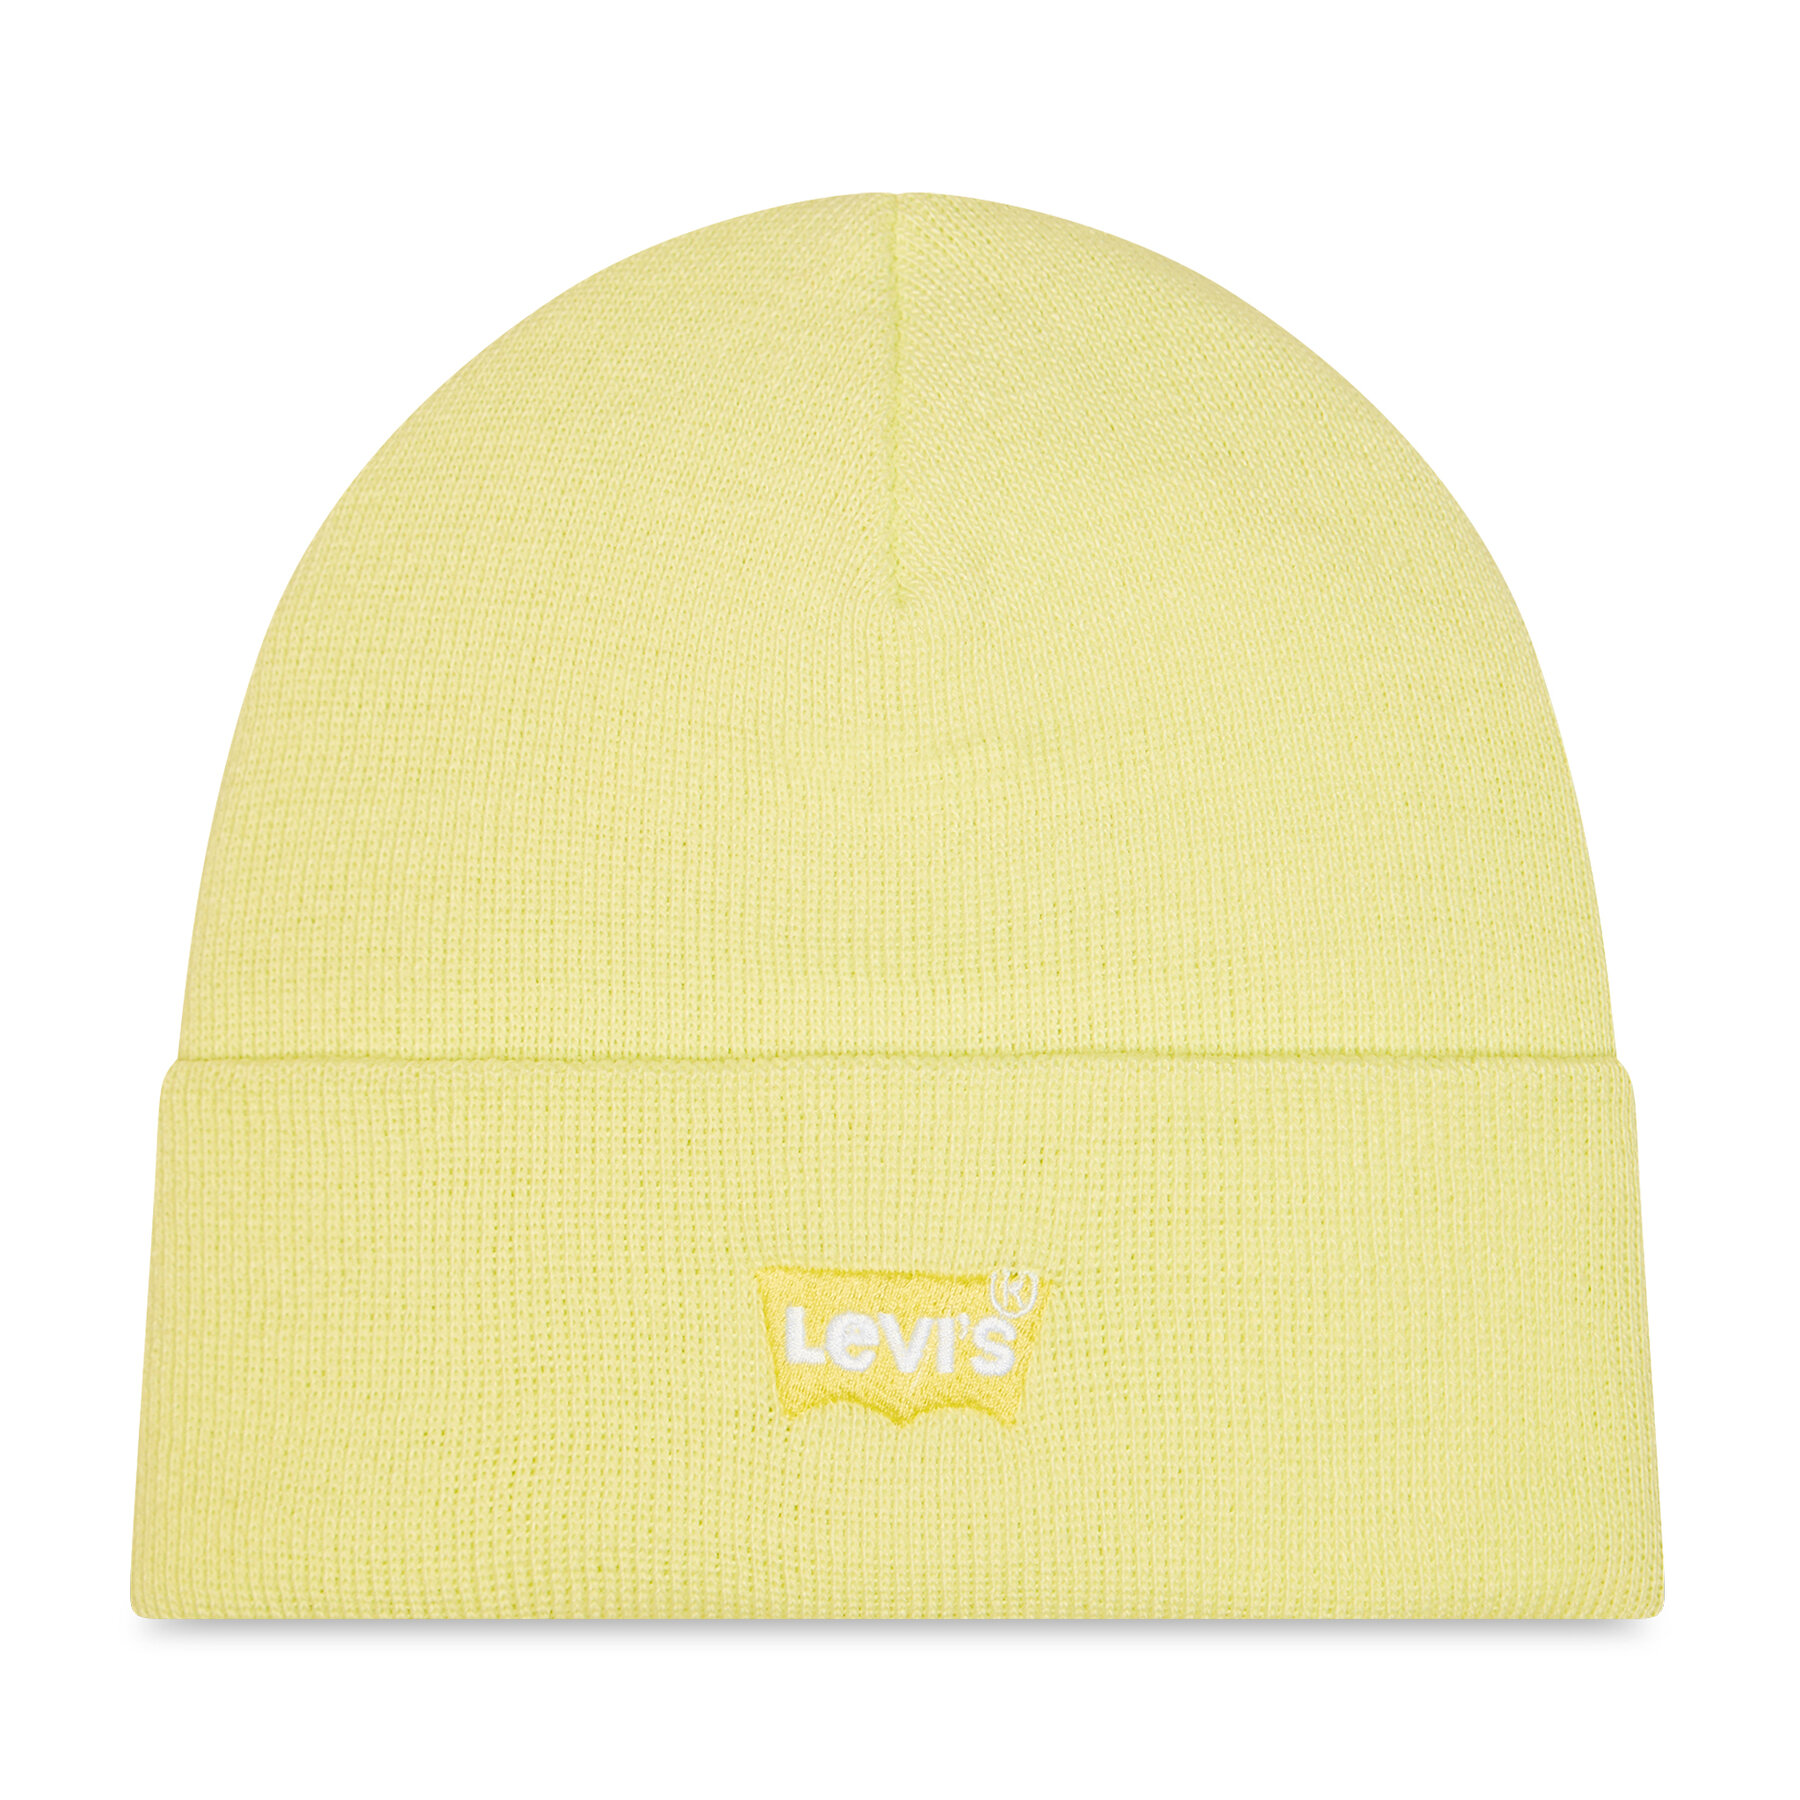 Comprar en oferta Levi's Tonal Batwing Slouchy Cap yellow